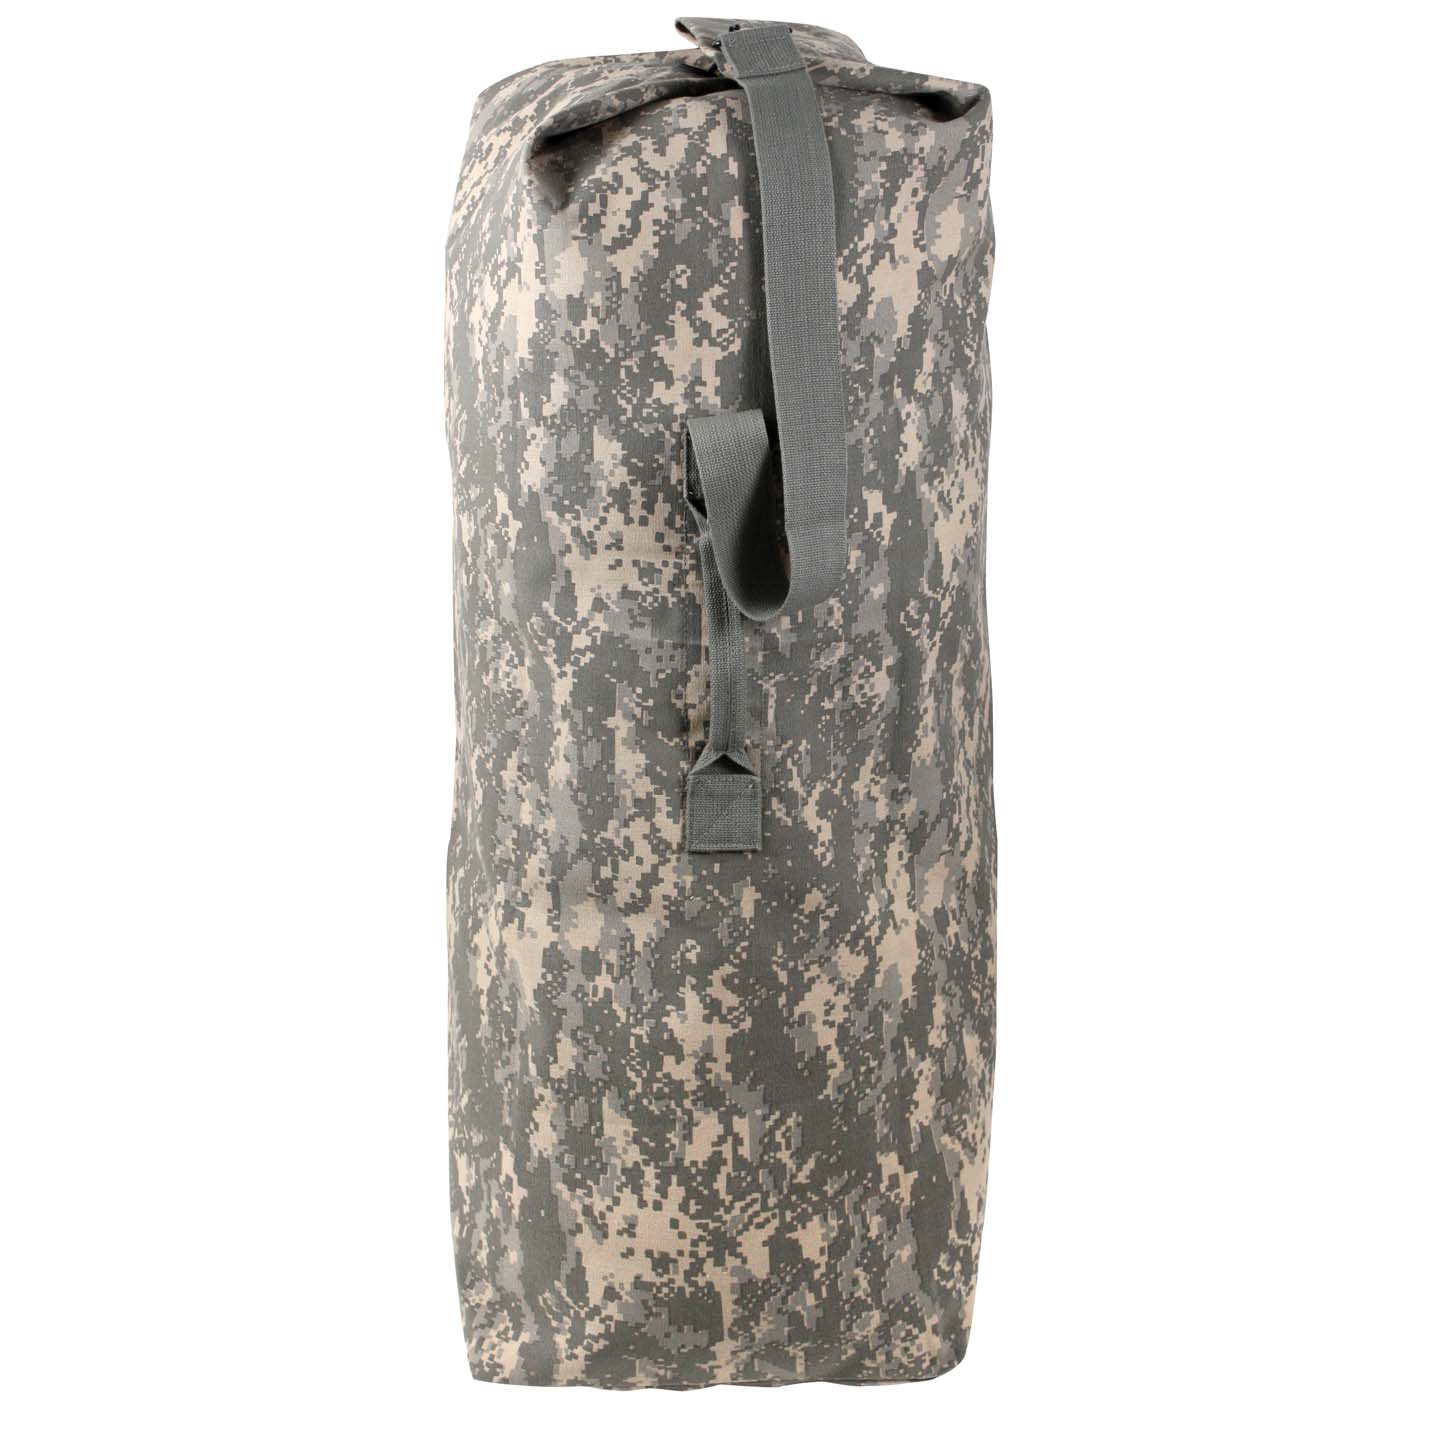 Duffel Bags - Rothco Heavyweight Top Load Canvas Duffle Bag